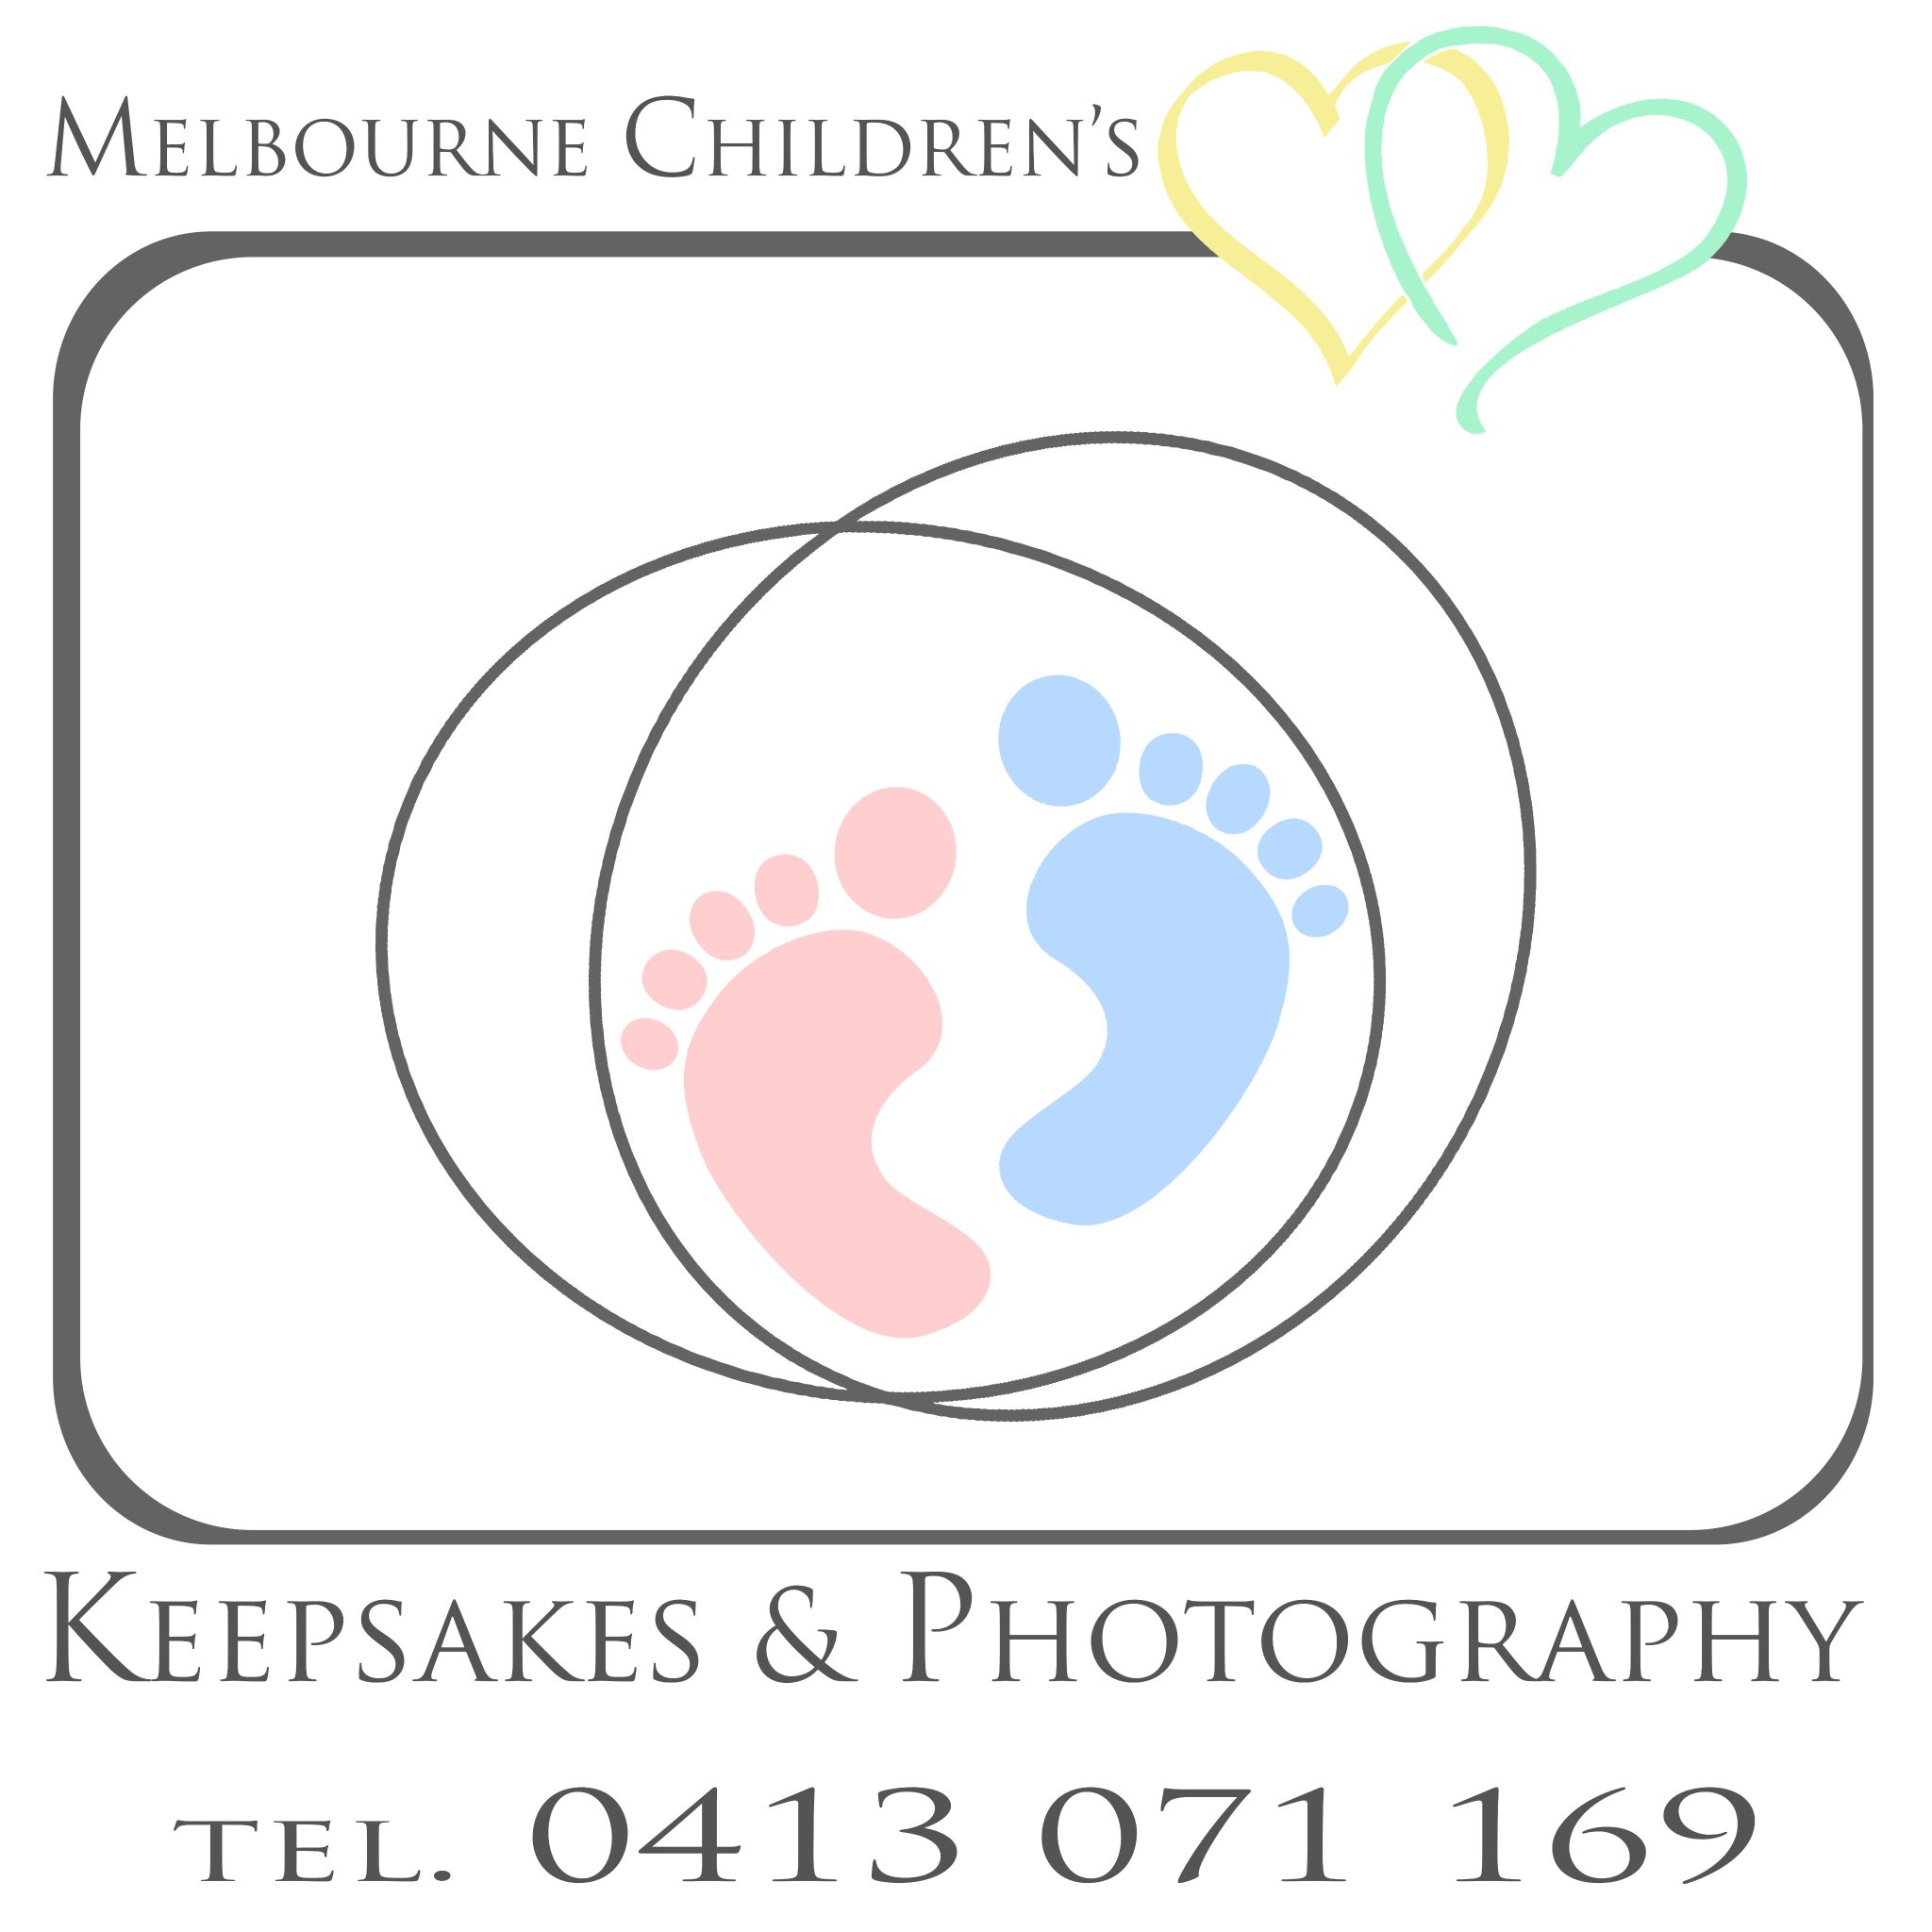 Newborn baby photography and Keepsakes individually made.